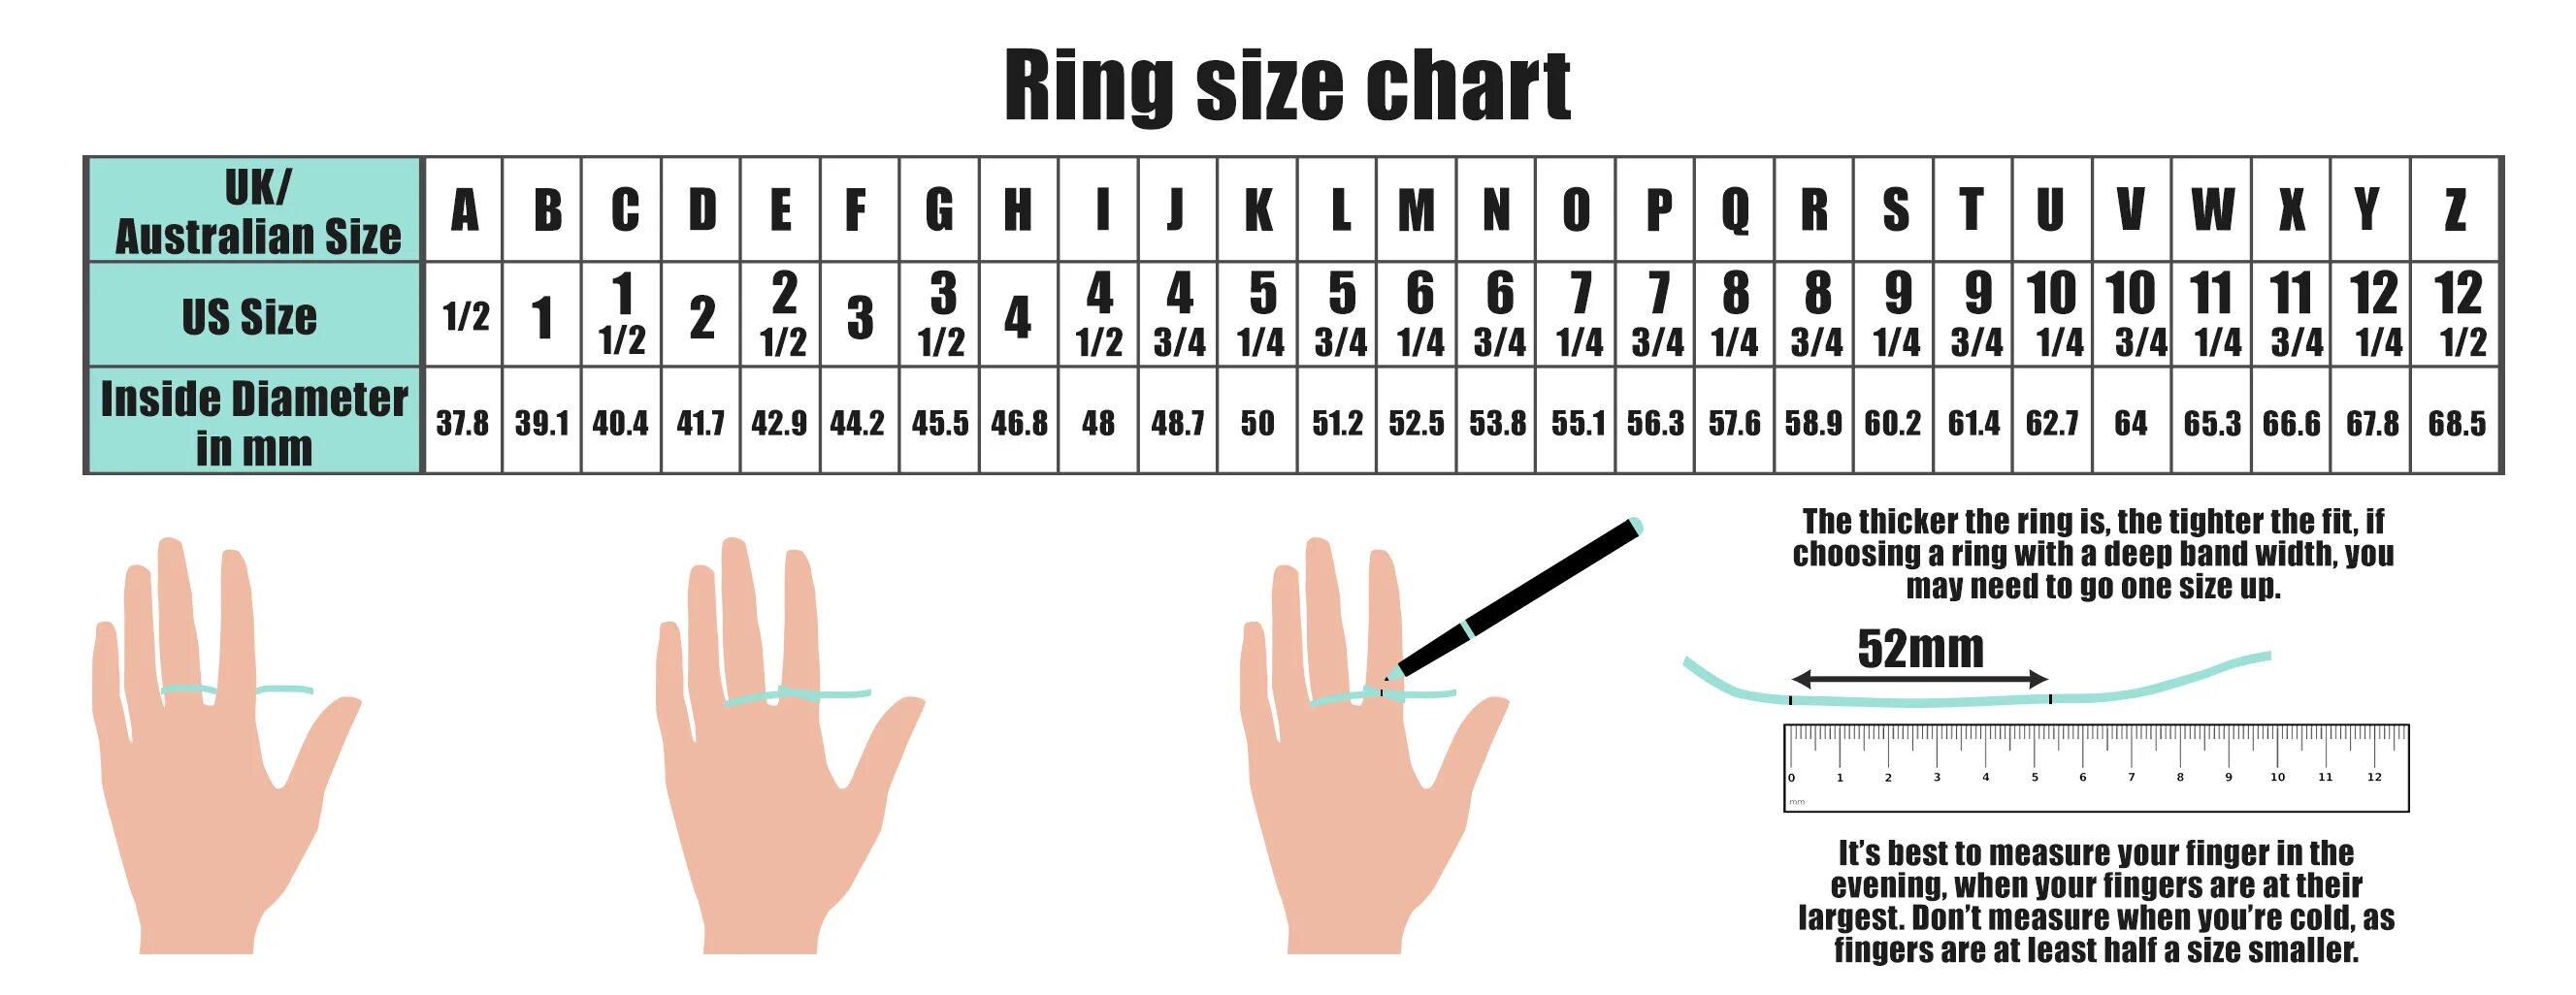 7 см какой диаметр. Размер кольца. Размер кольца us. Как определить размер кольца. International Ring Size Chart.